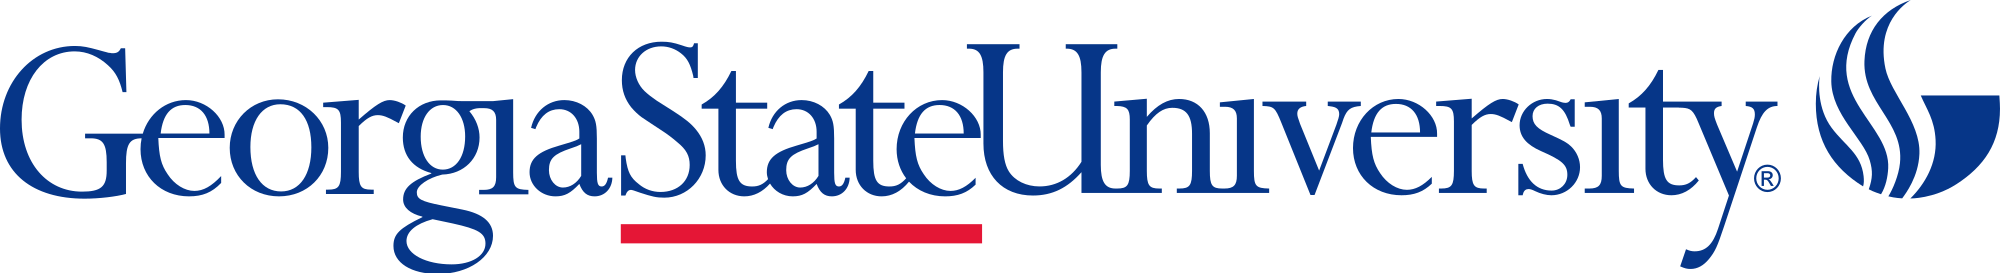 Georgia_State_University-logo.svg.png